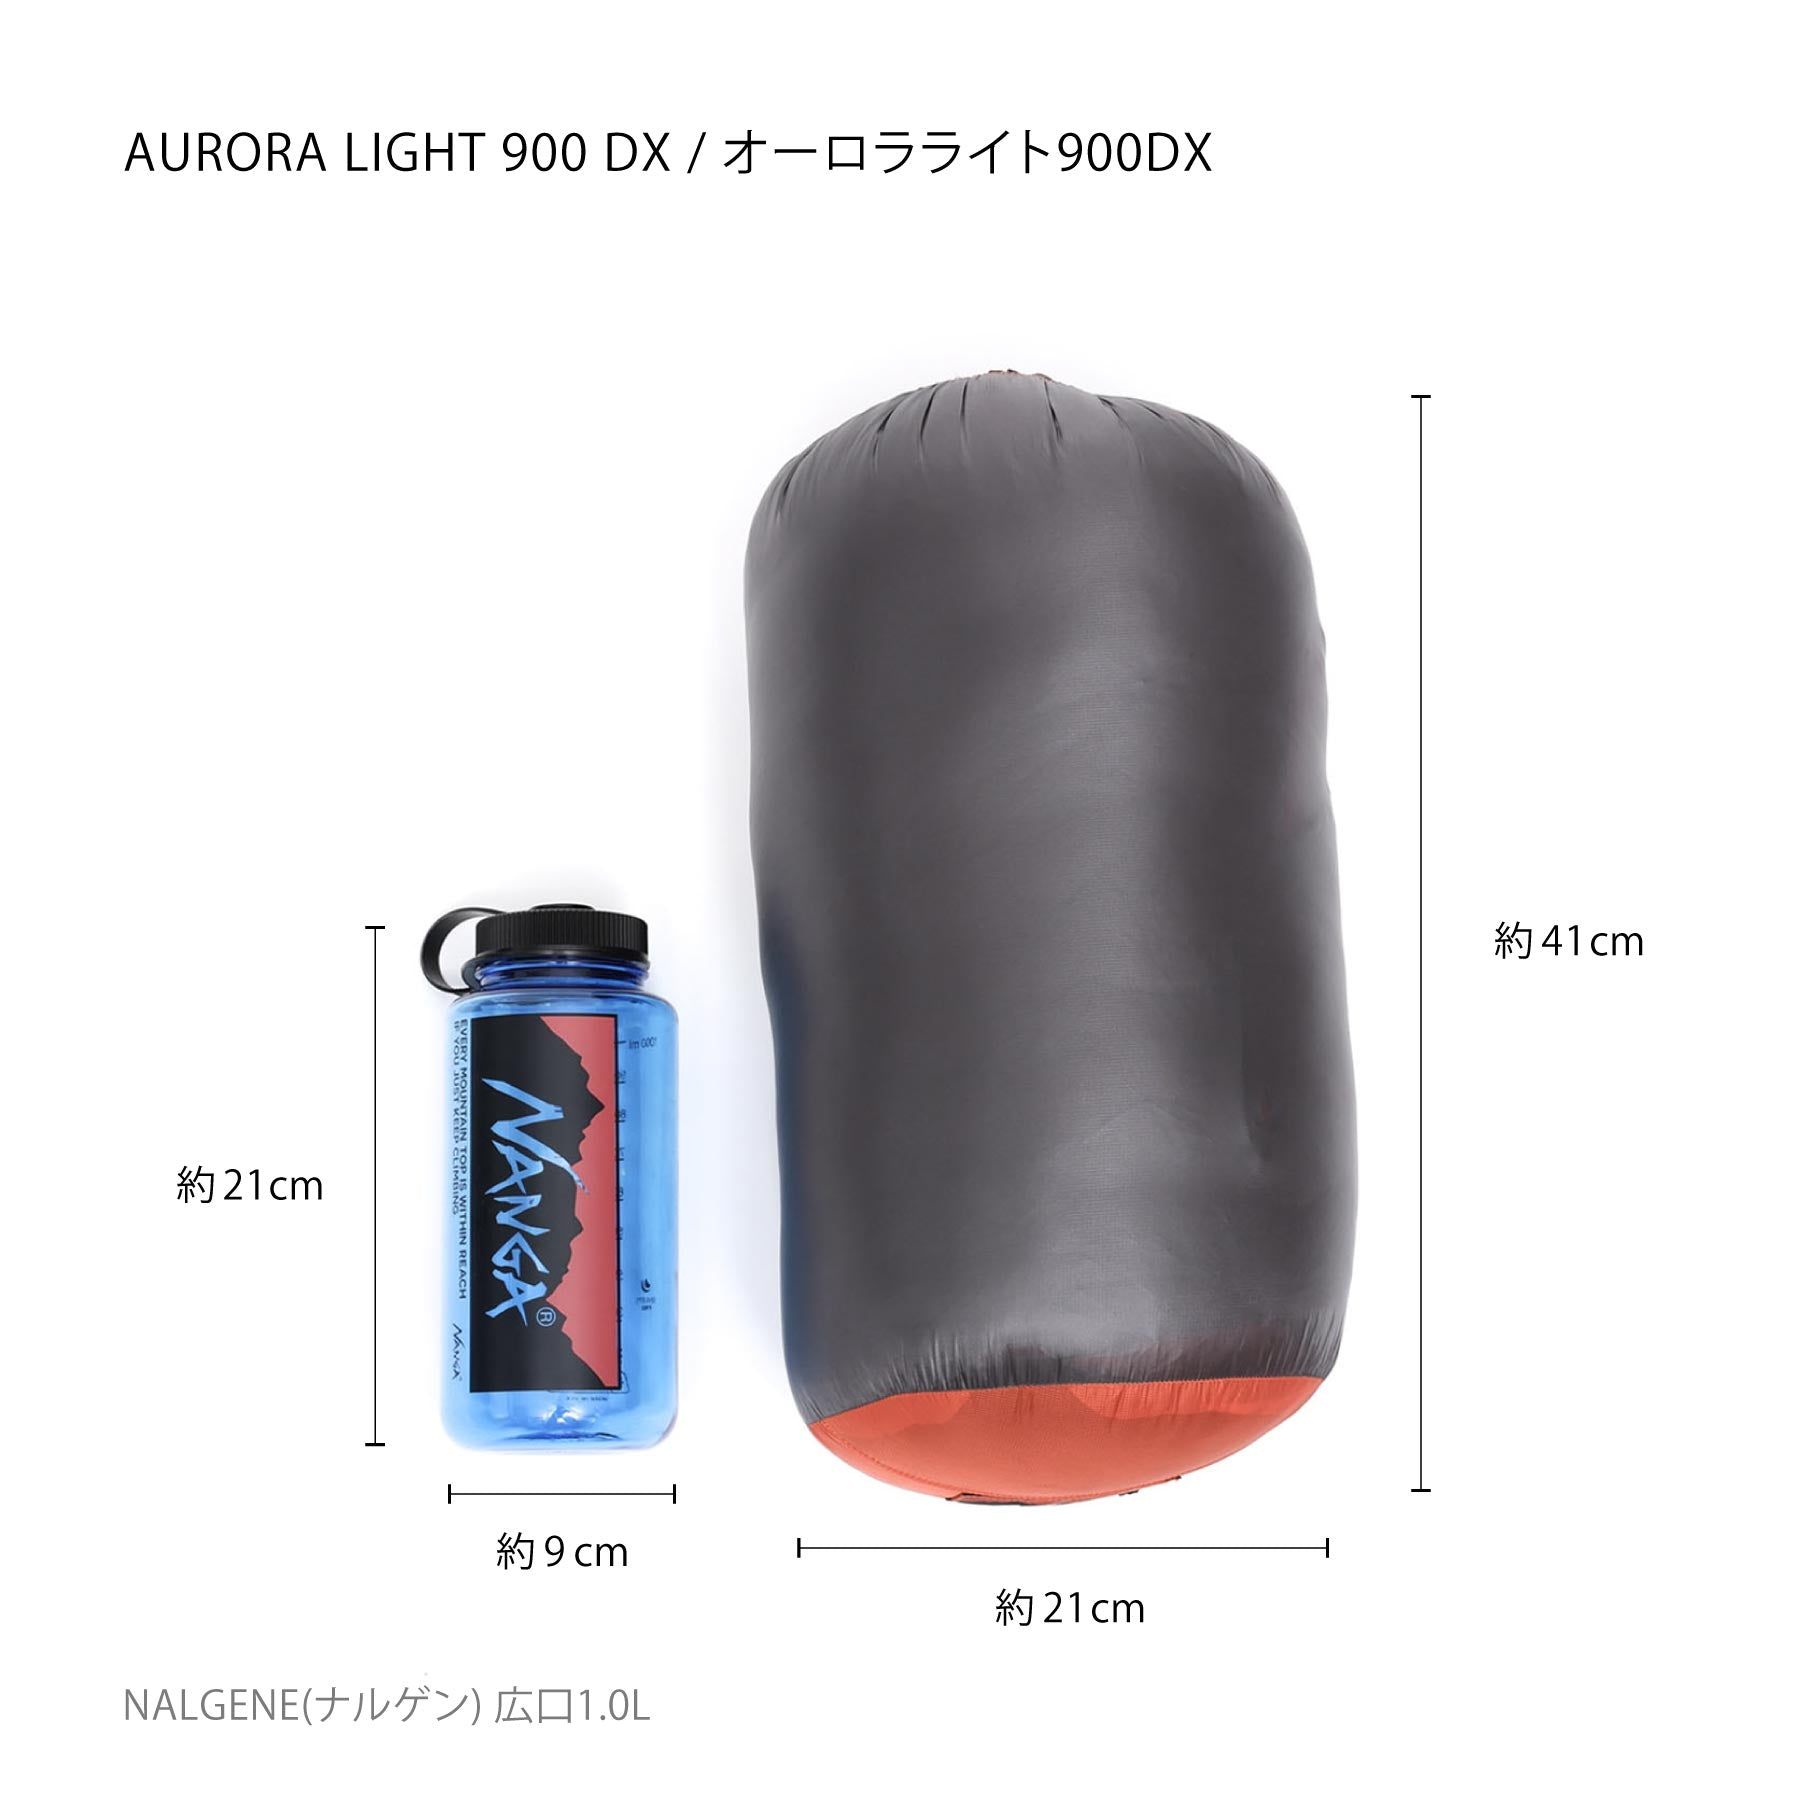 AURORA light 900 DX / オーロラライト900DX – NANGA ONLINE SHOP